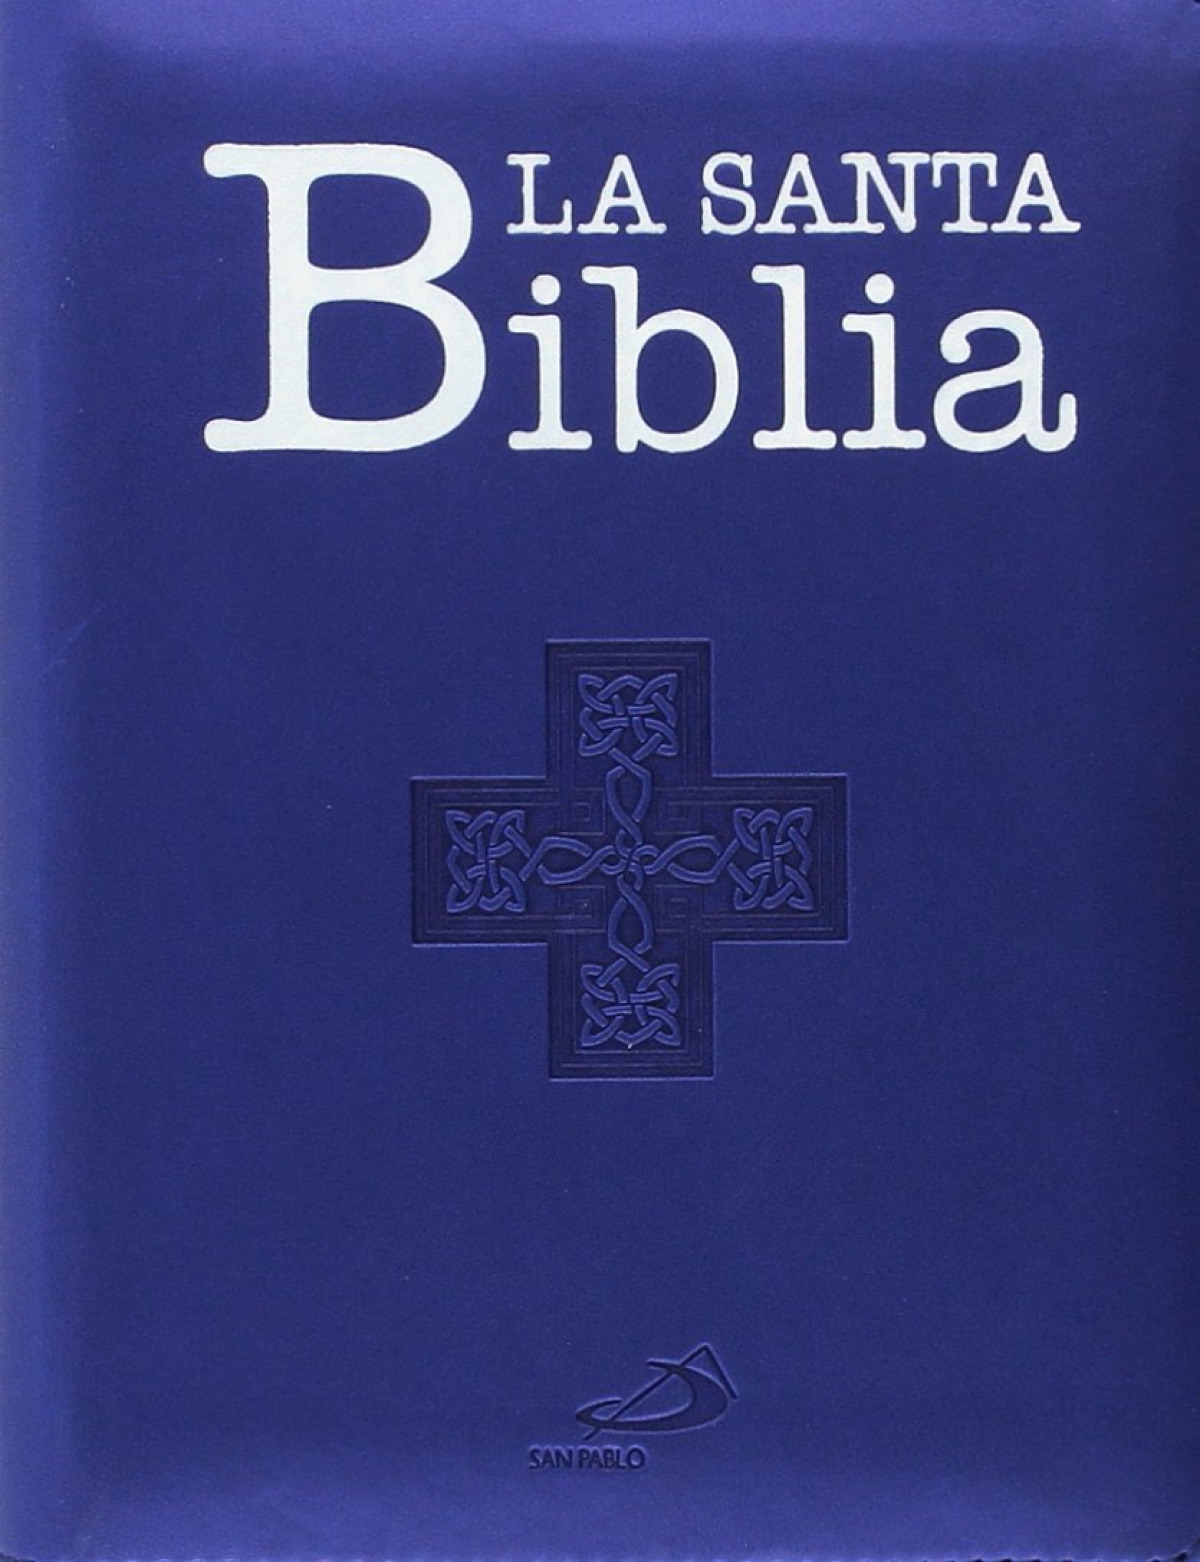 La santa biblia - Aa.Vv.